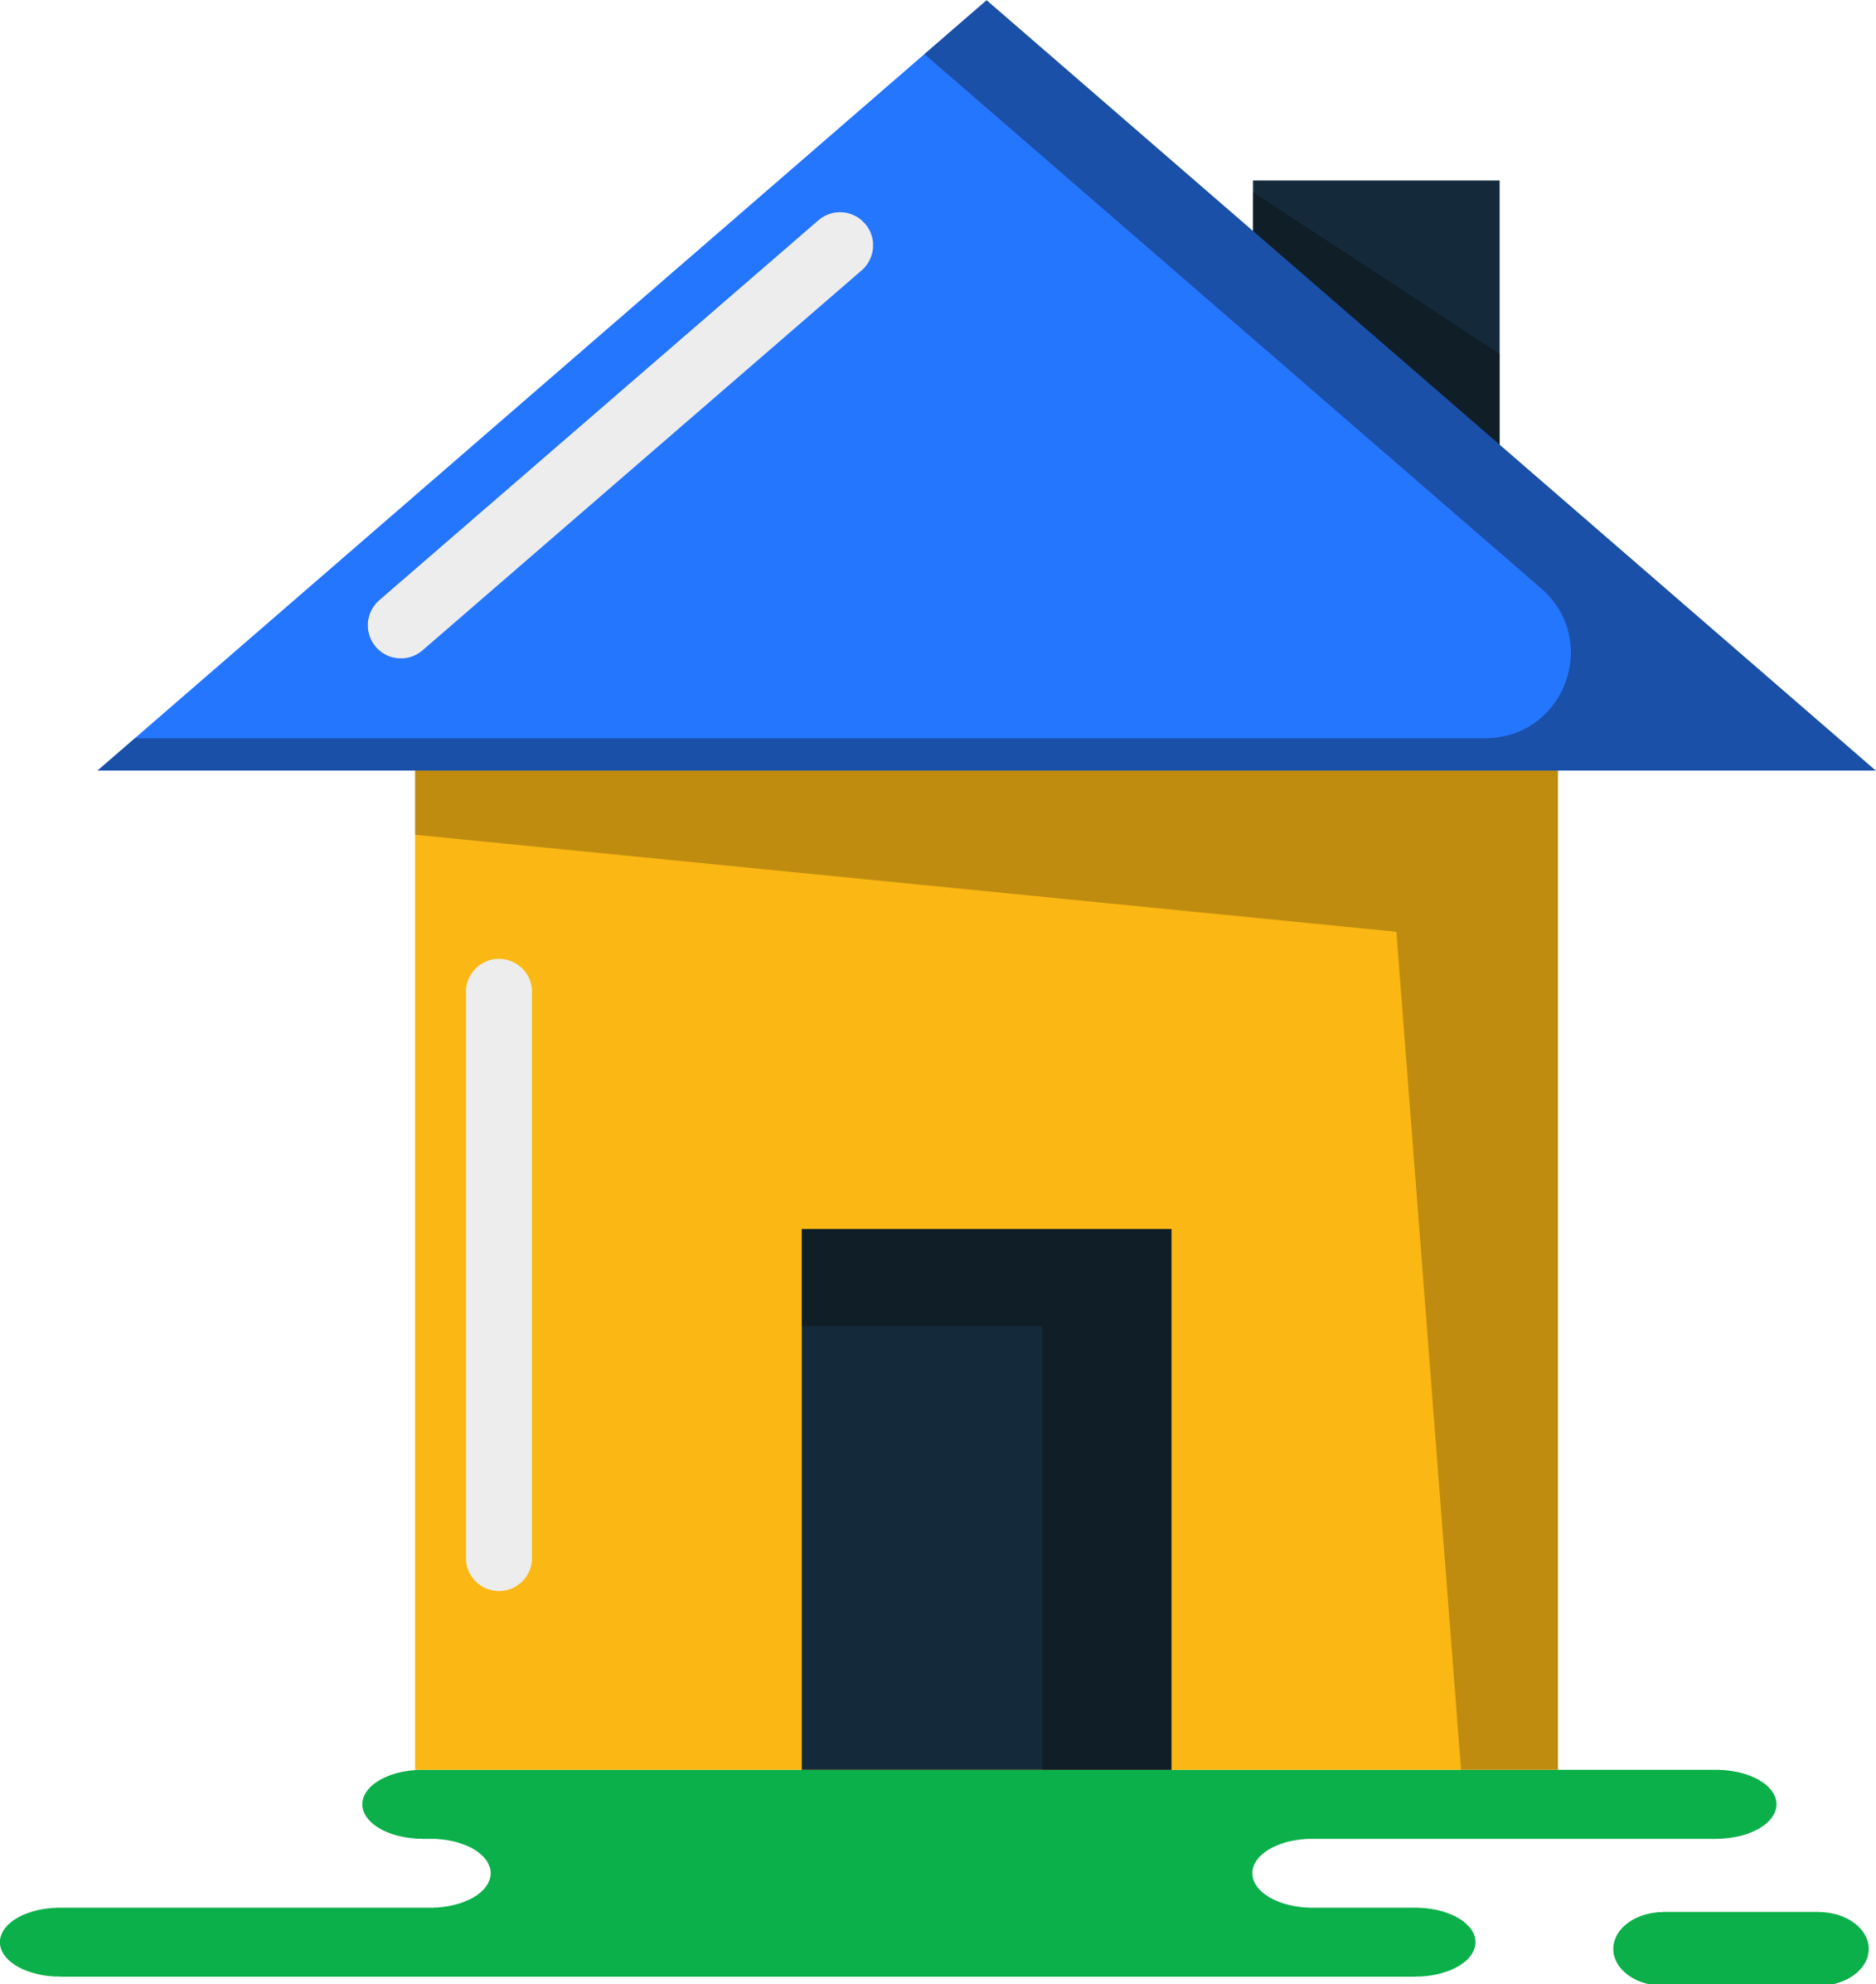 home illustration